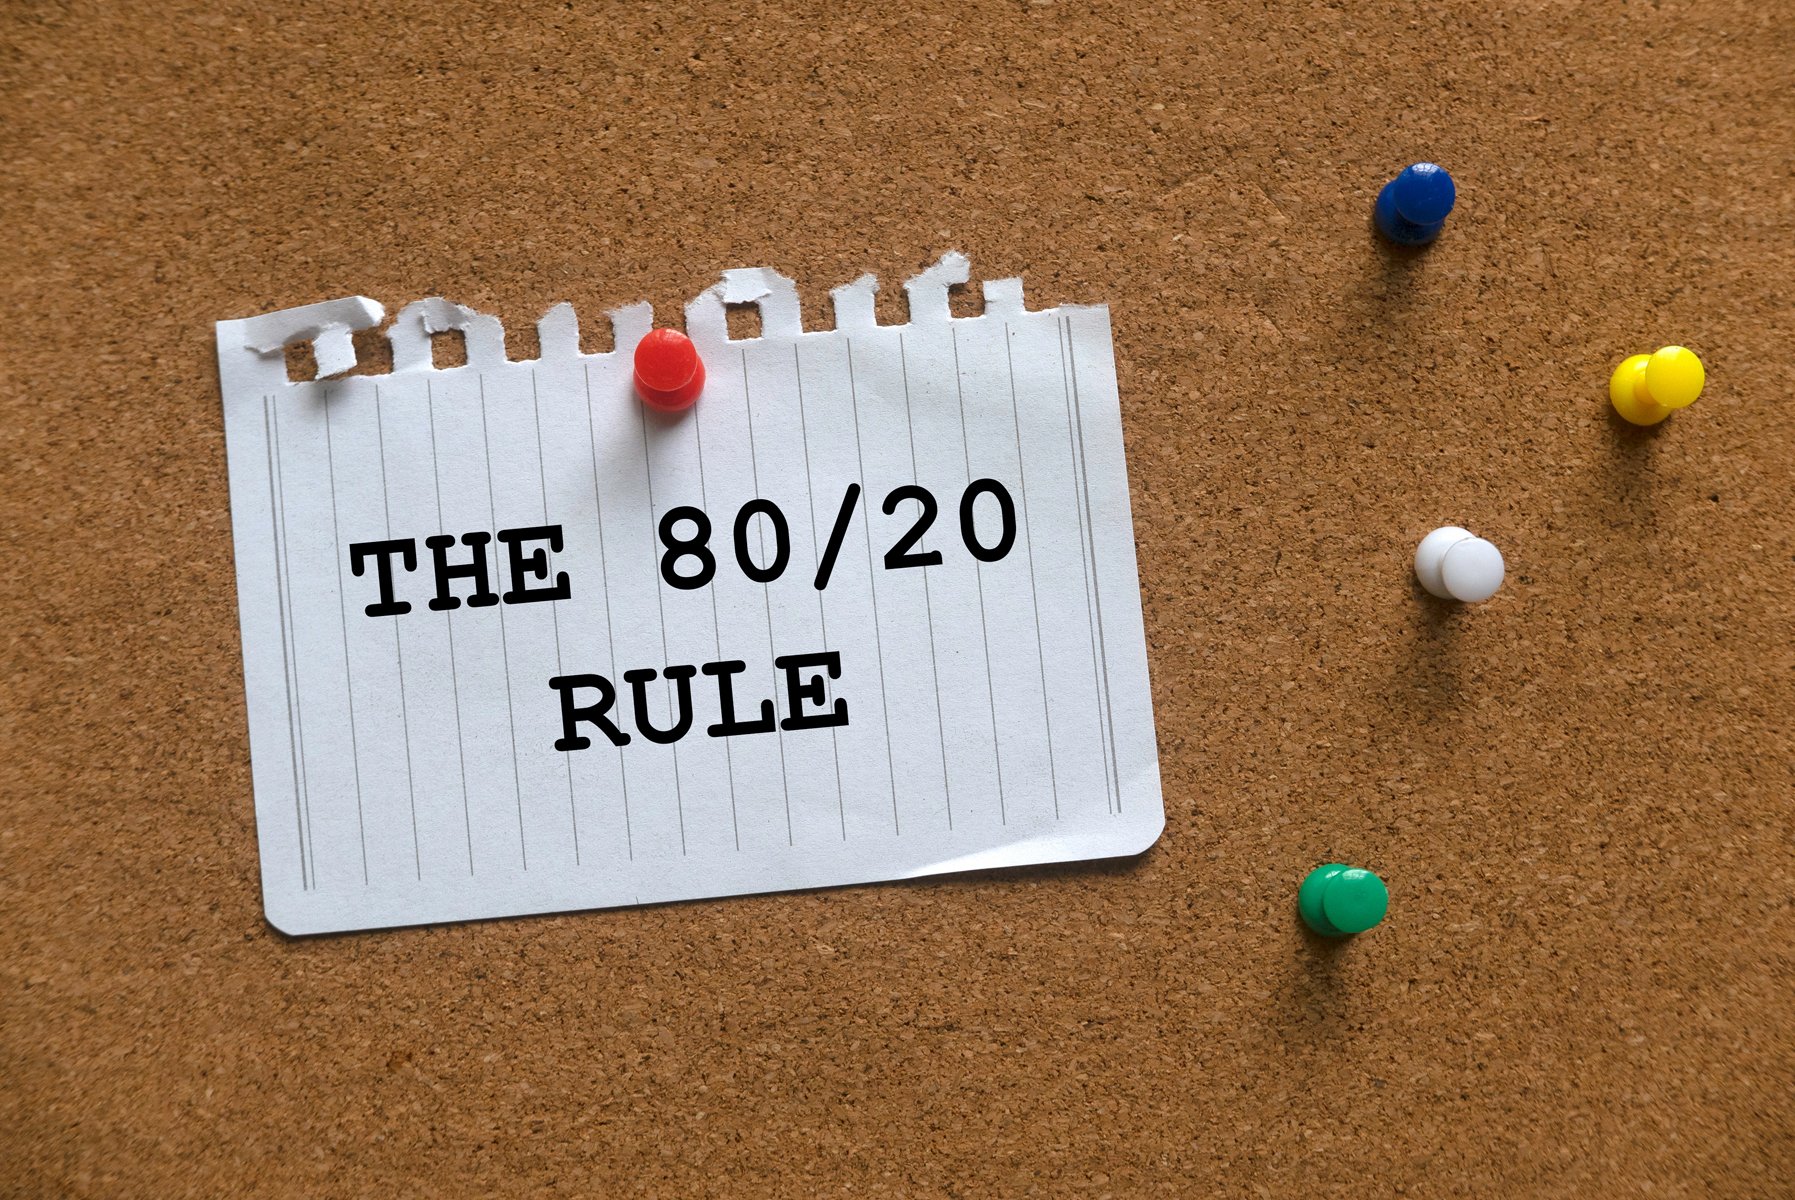 the-80-20-rule-2021-08-31-02-49-28-utc